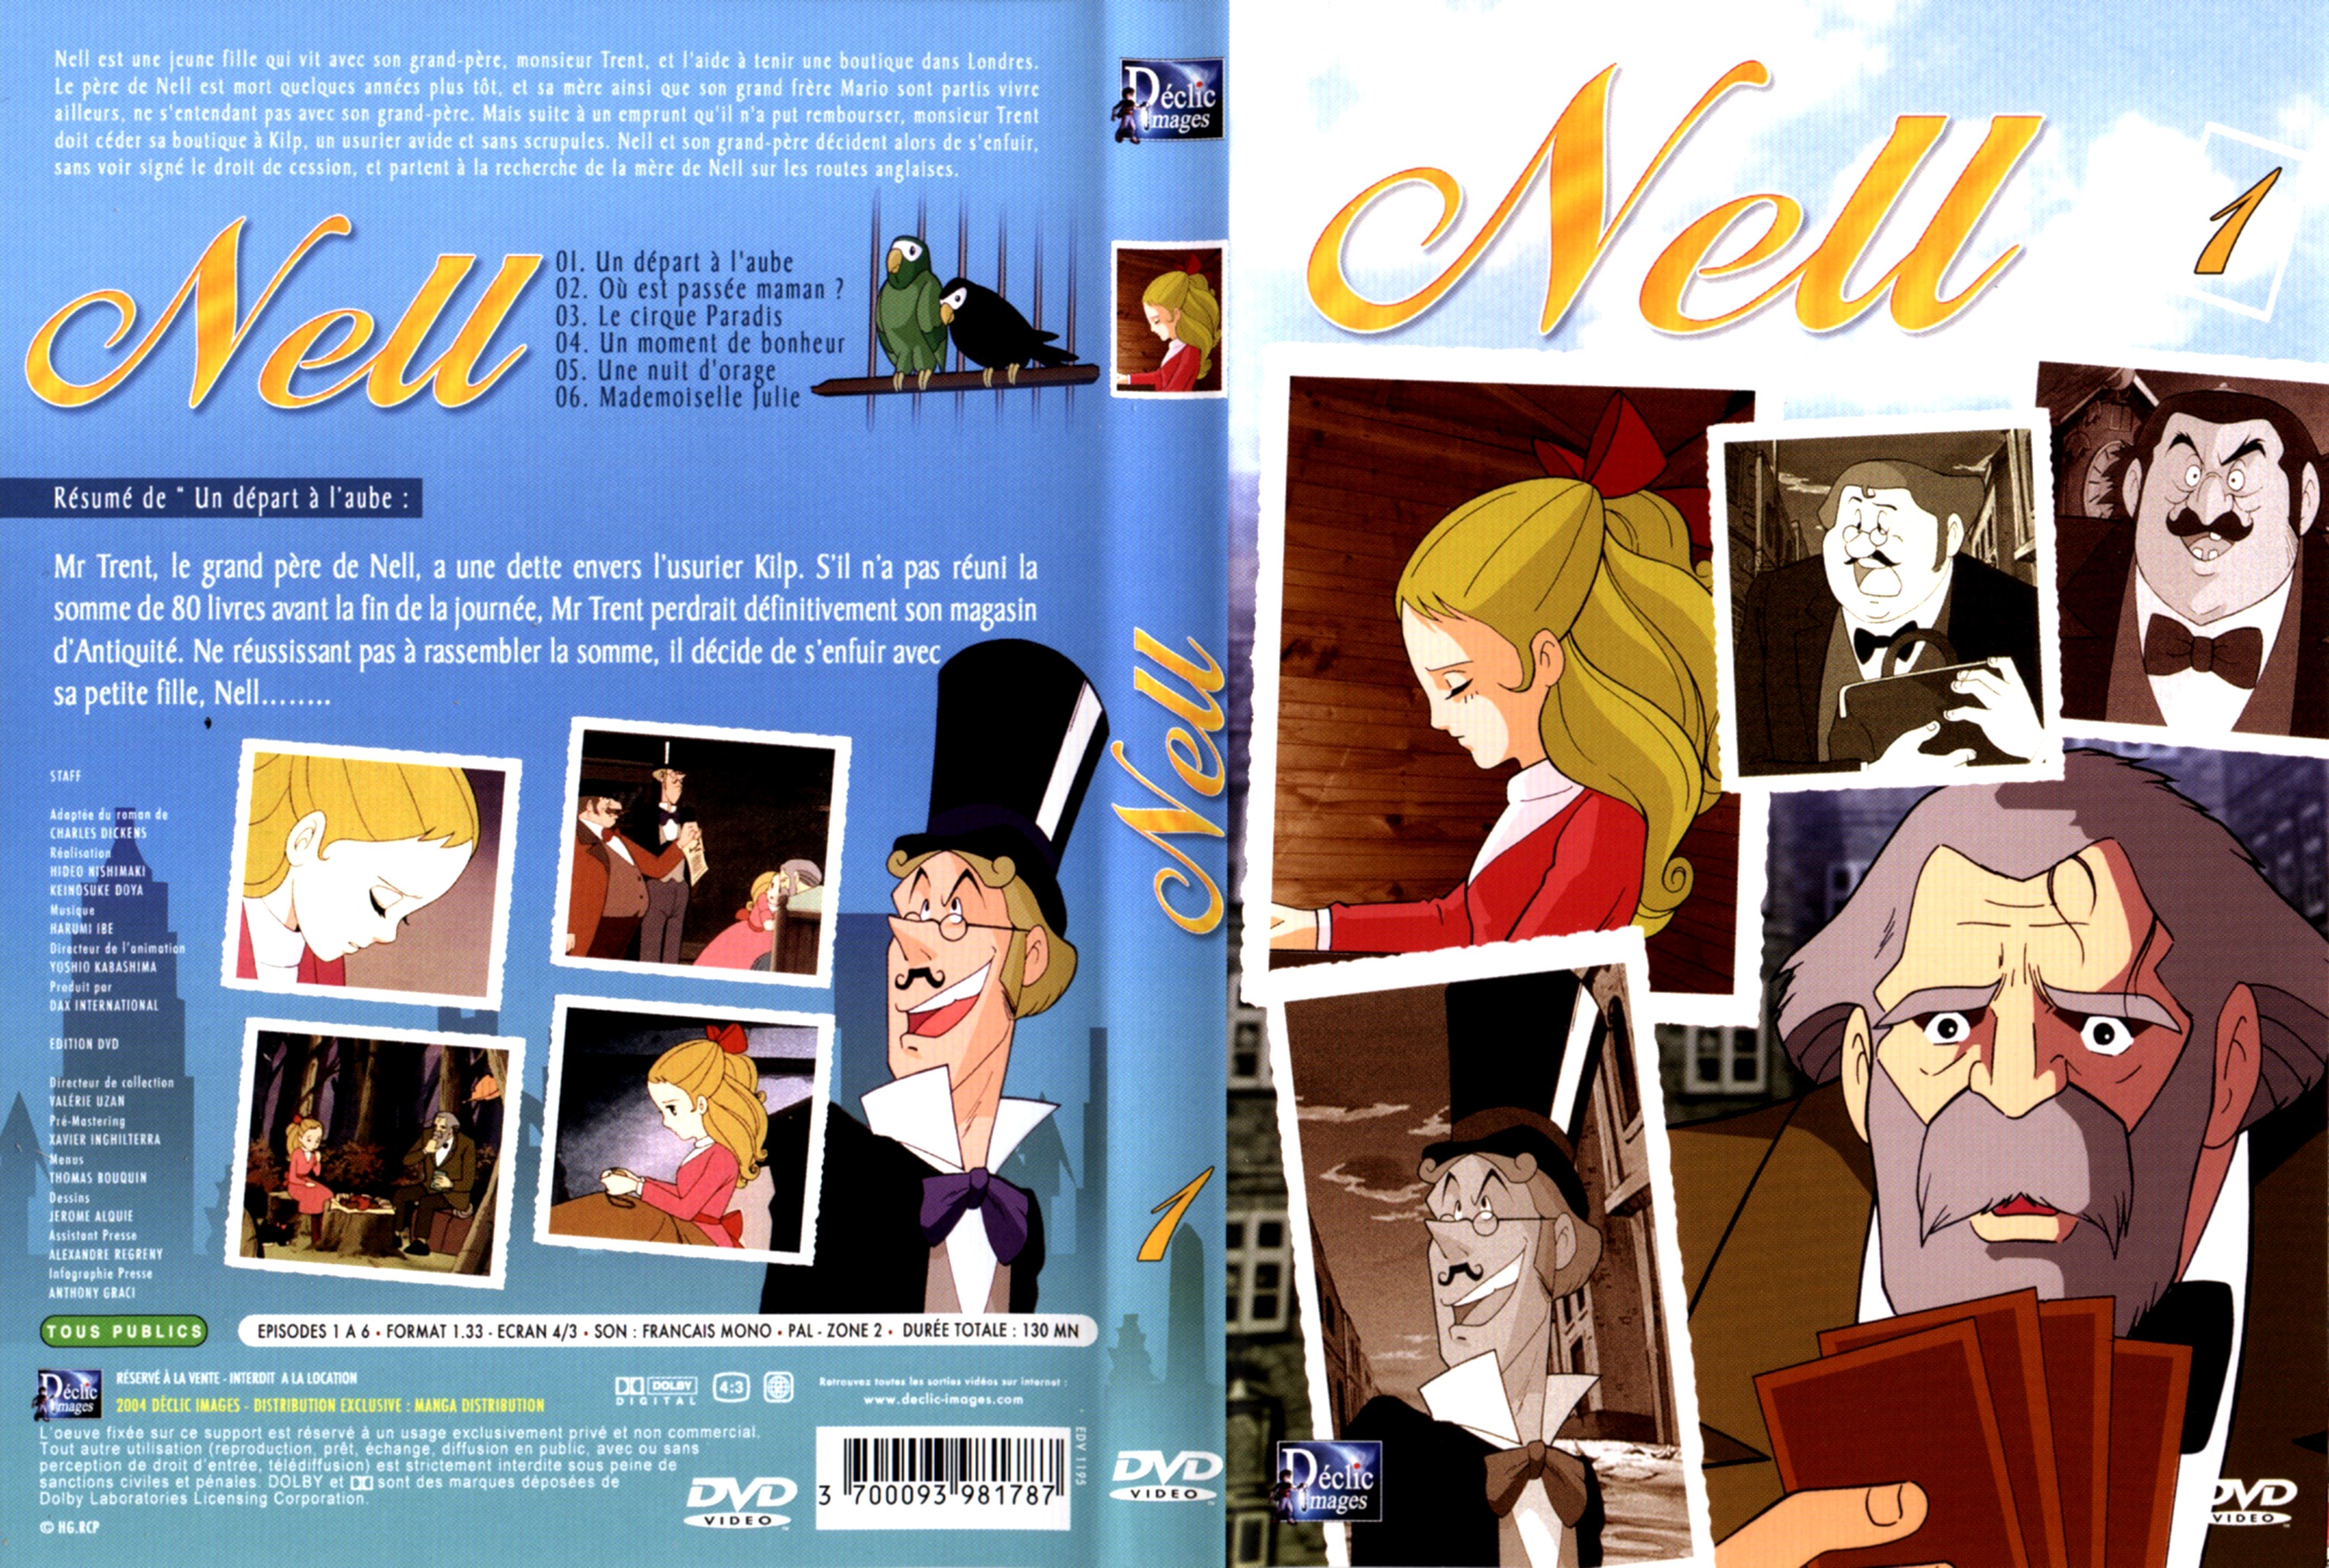 Jaquette DVD Nell vol 1